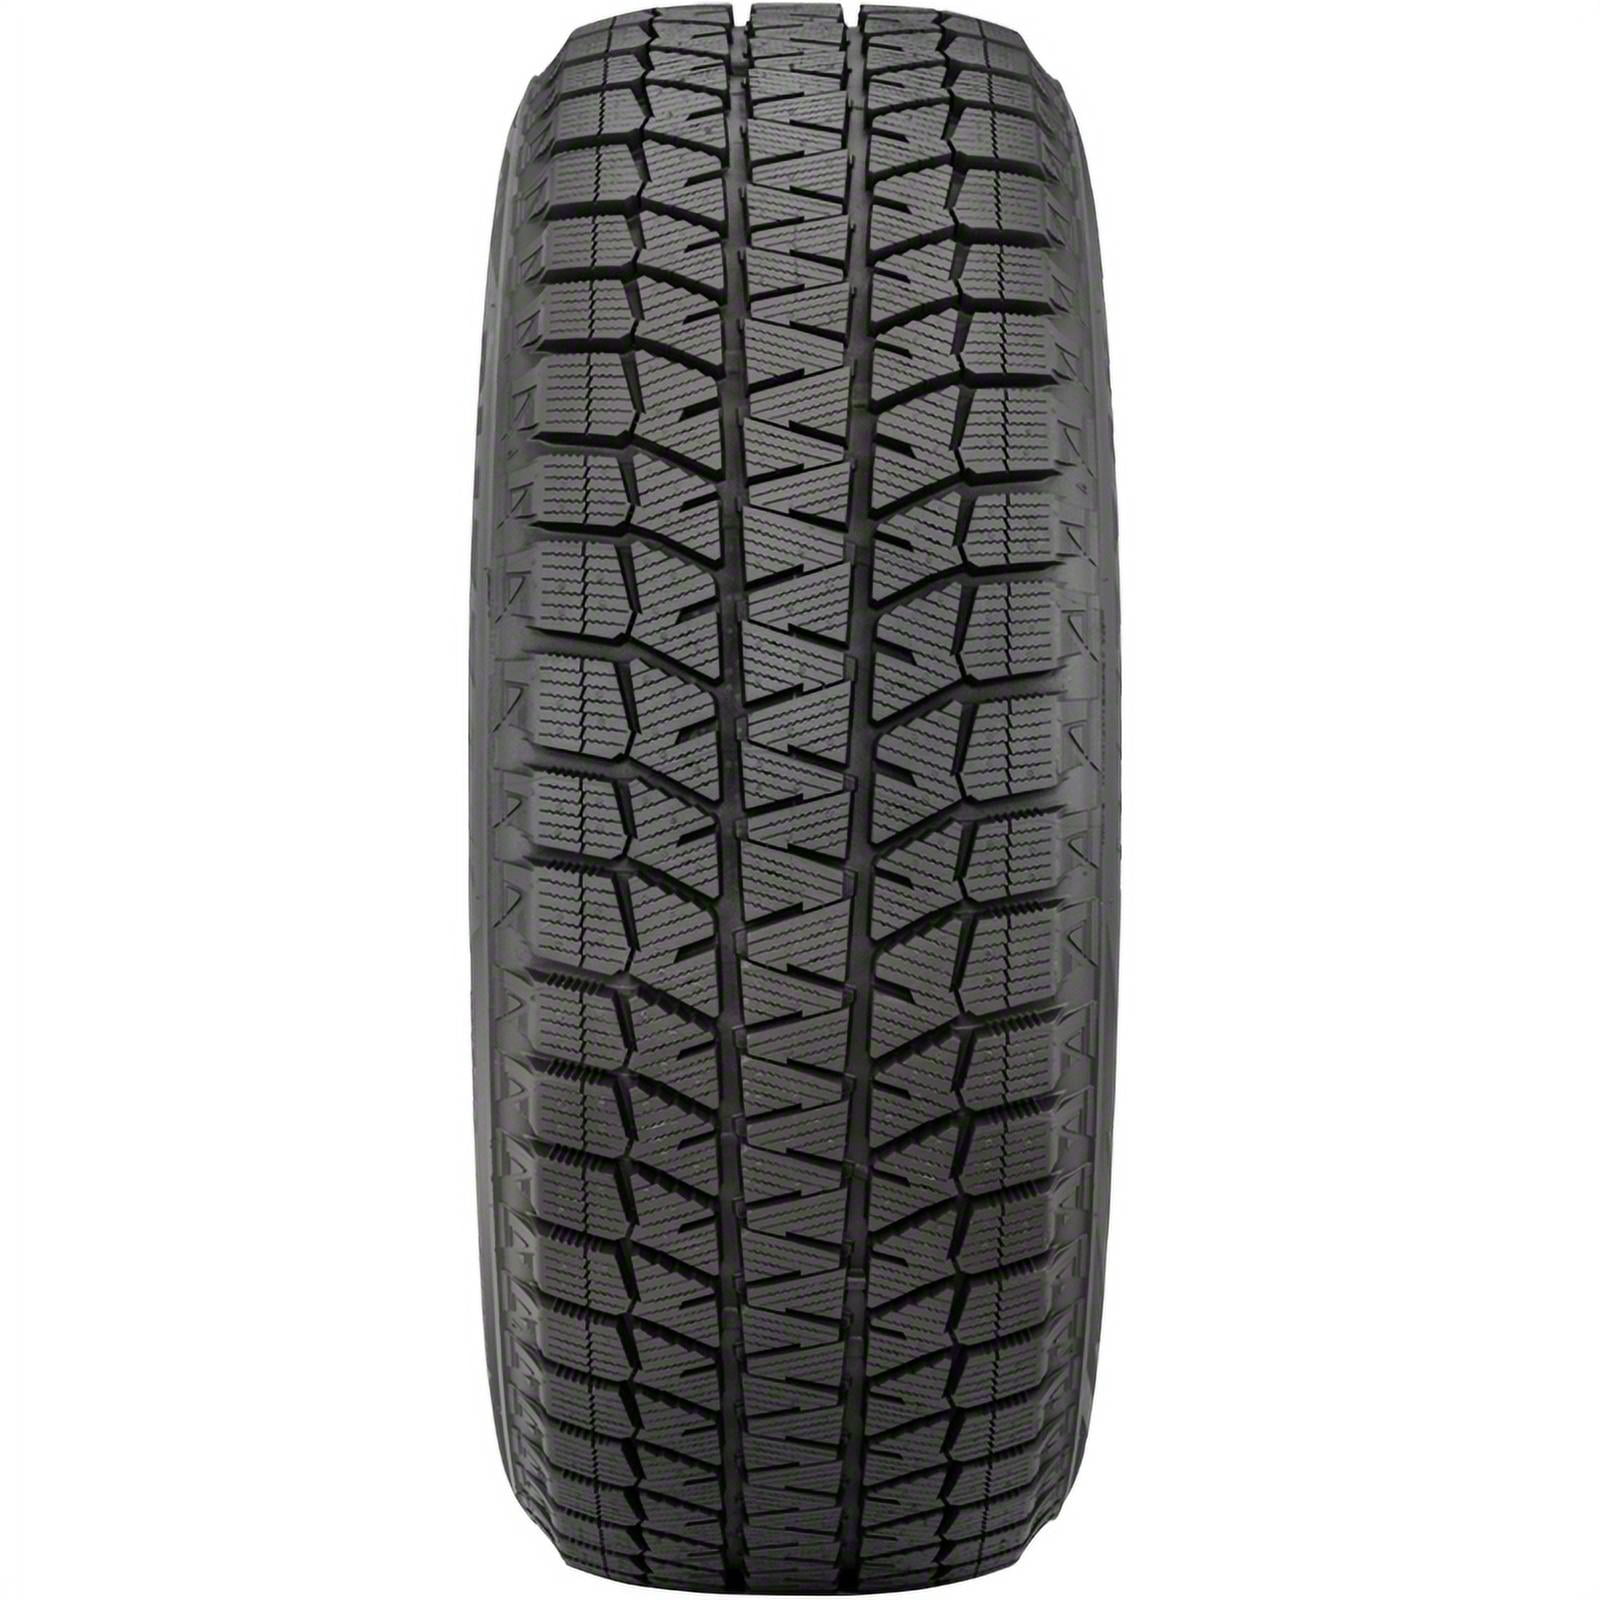 Bridgestone Blizzak WS80 225/65R17 102 H Tire - Walmart.com